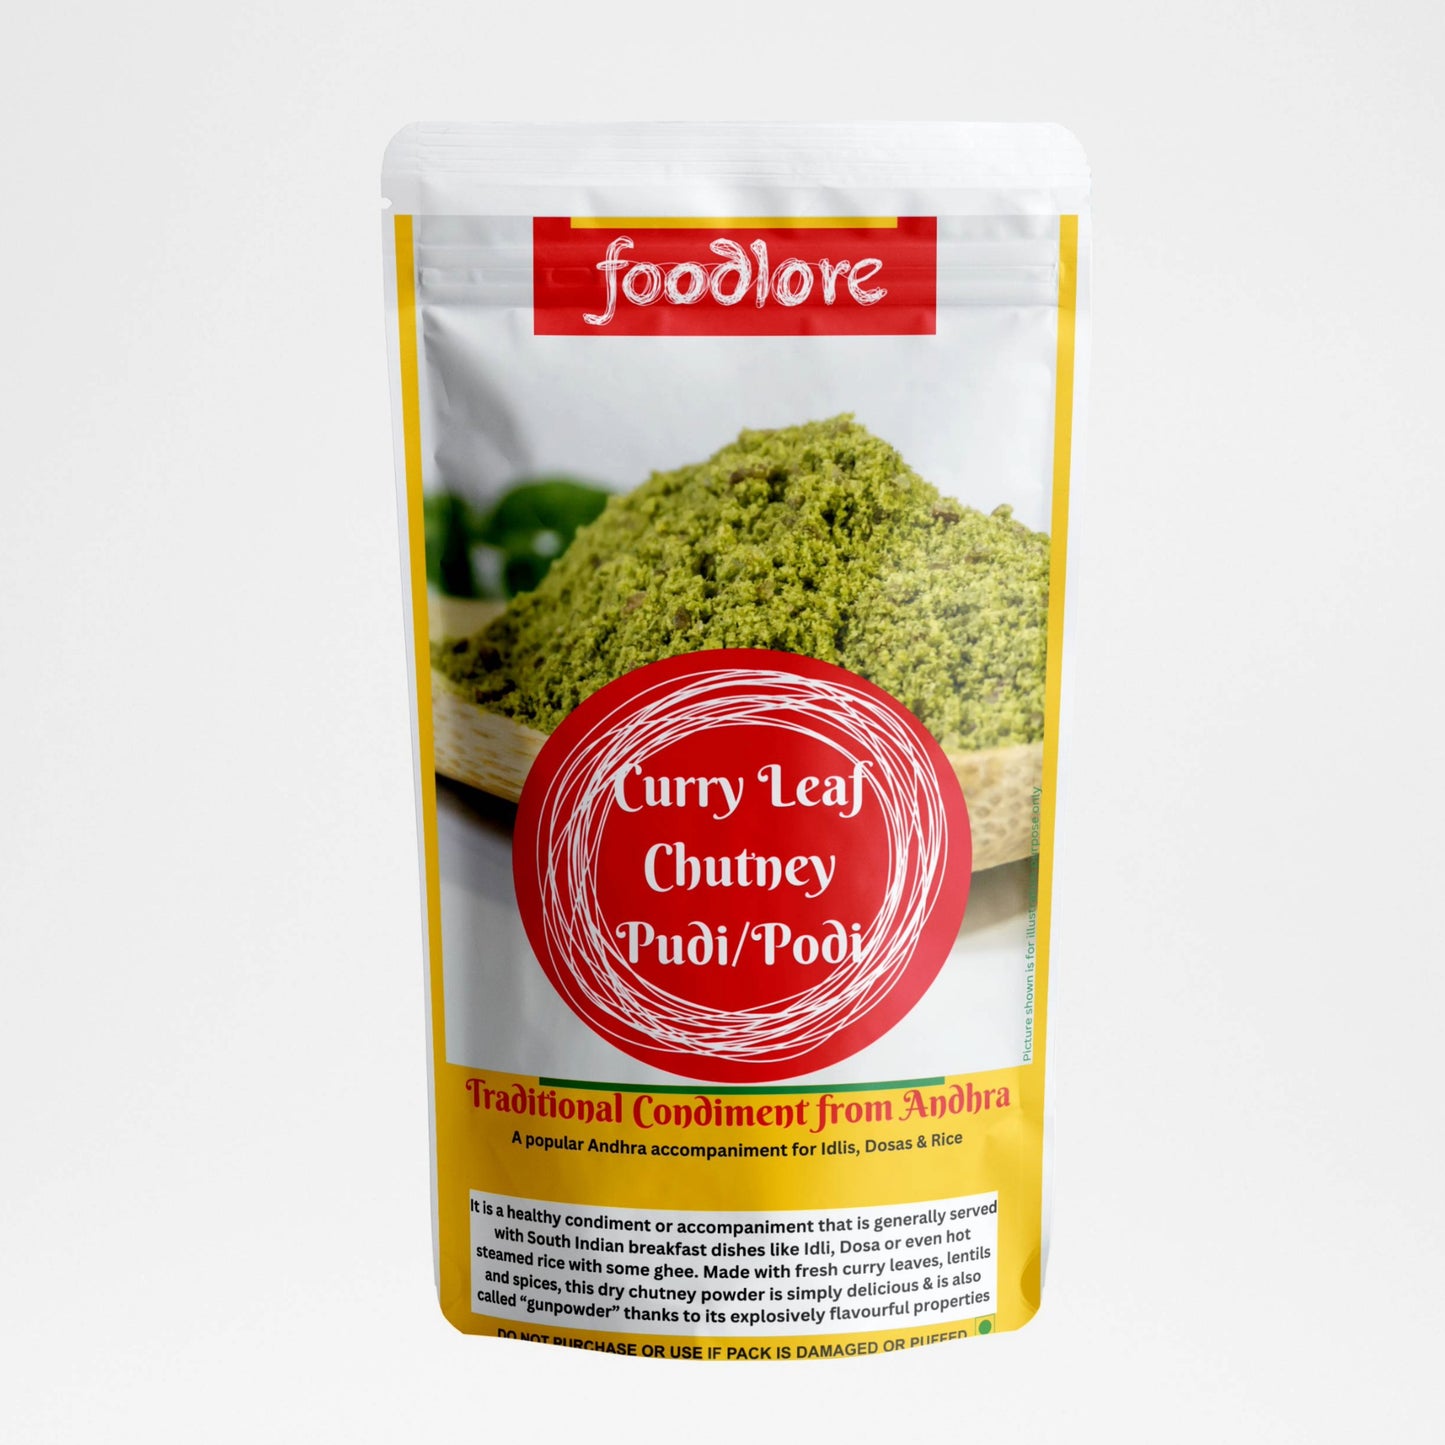 Curry leaf Chutney Pudi/Podi from Andhra